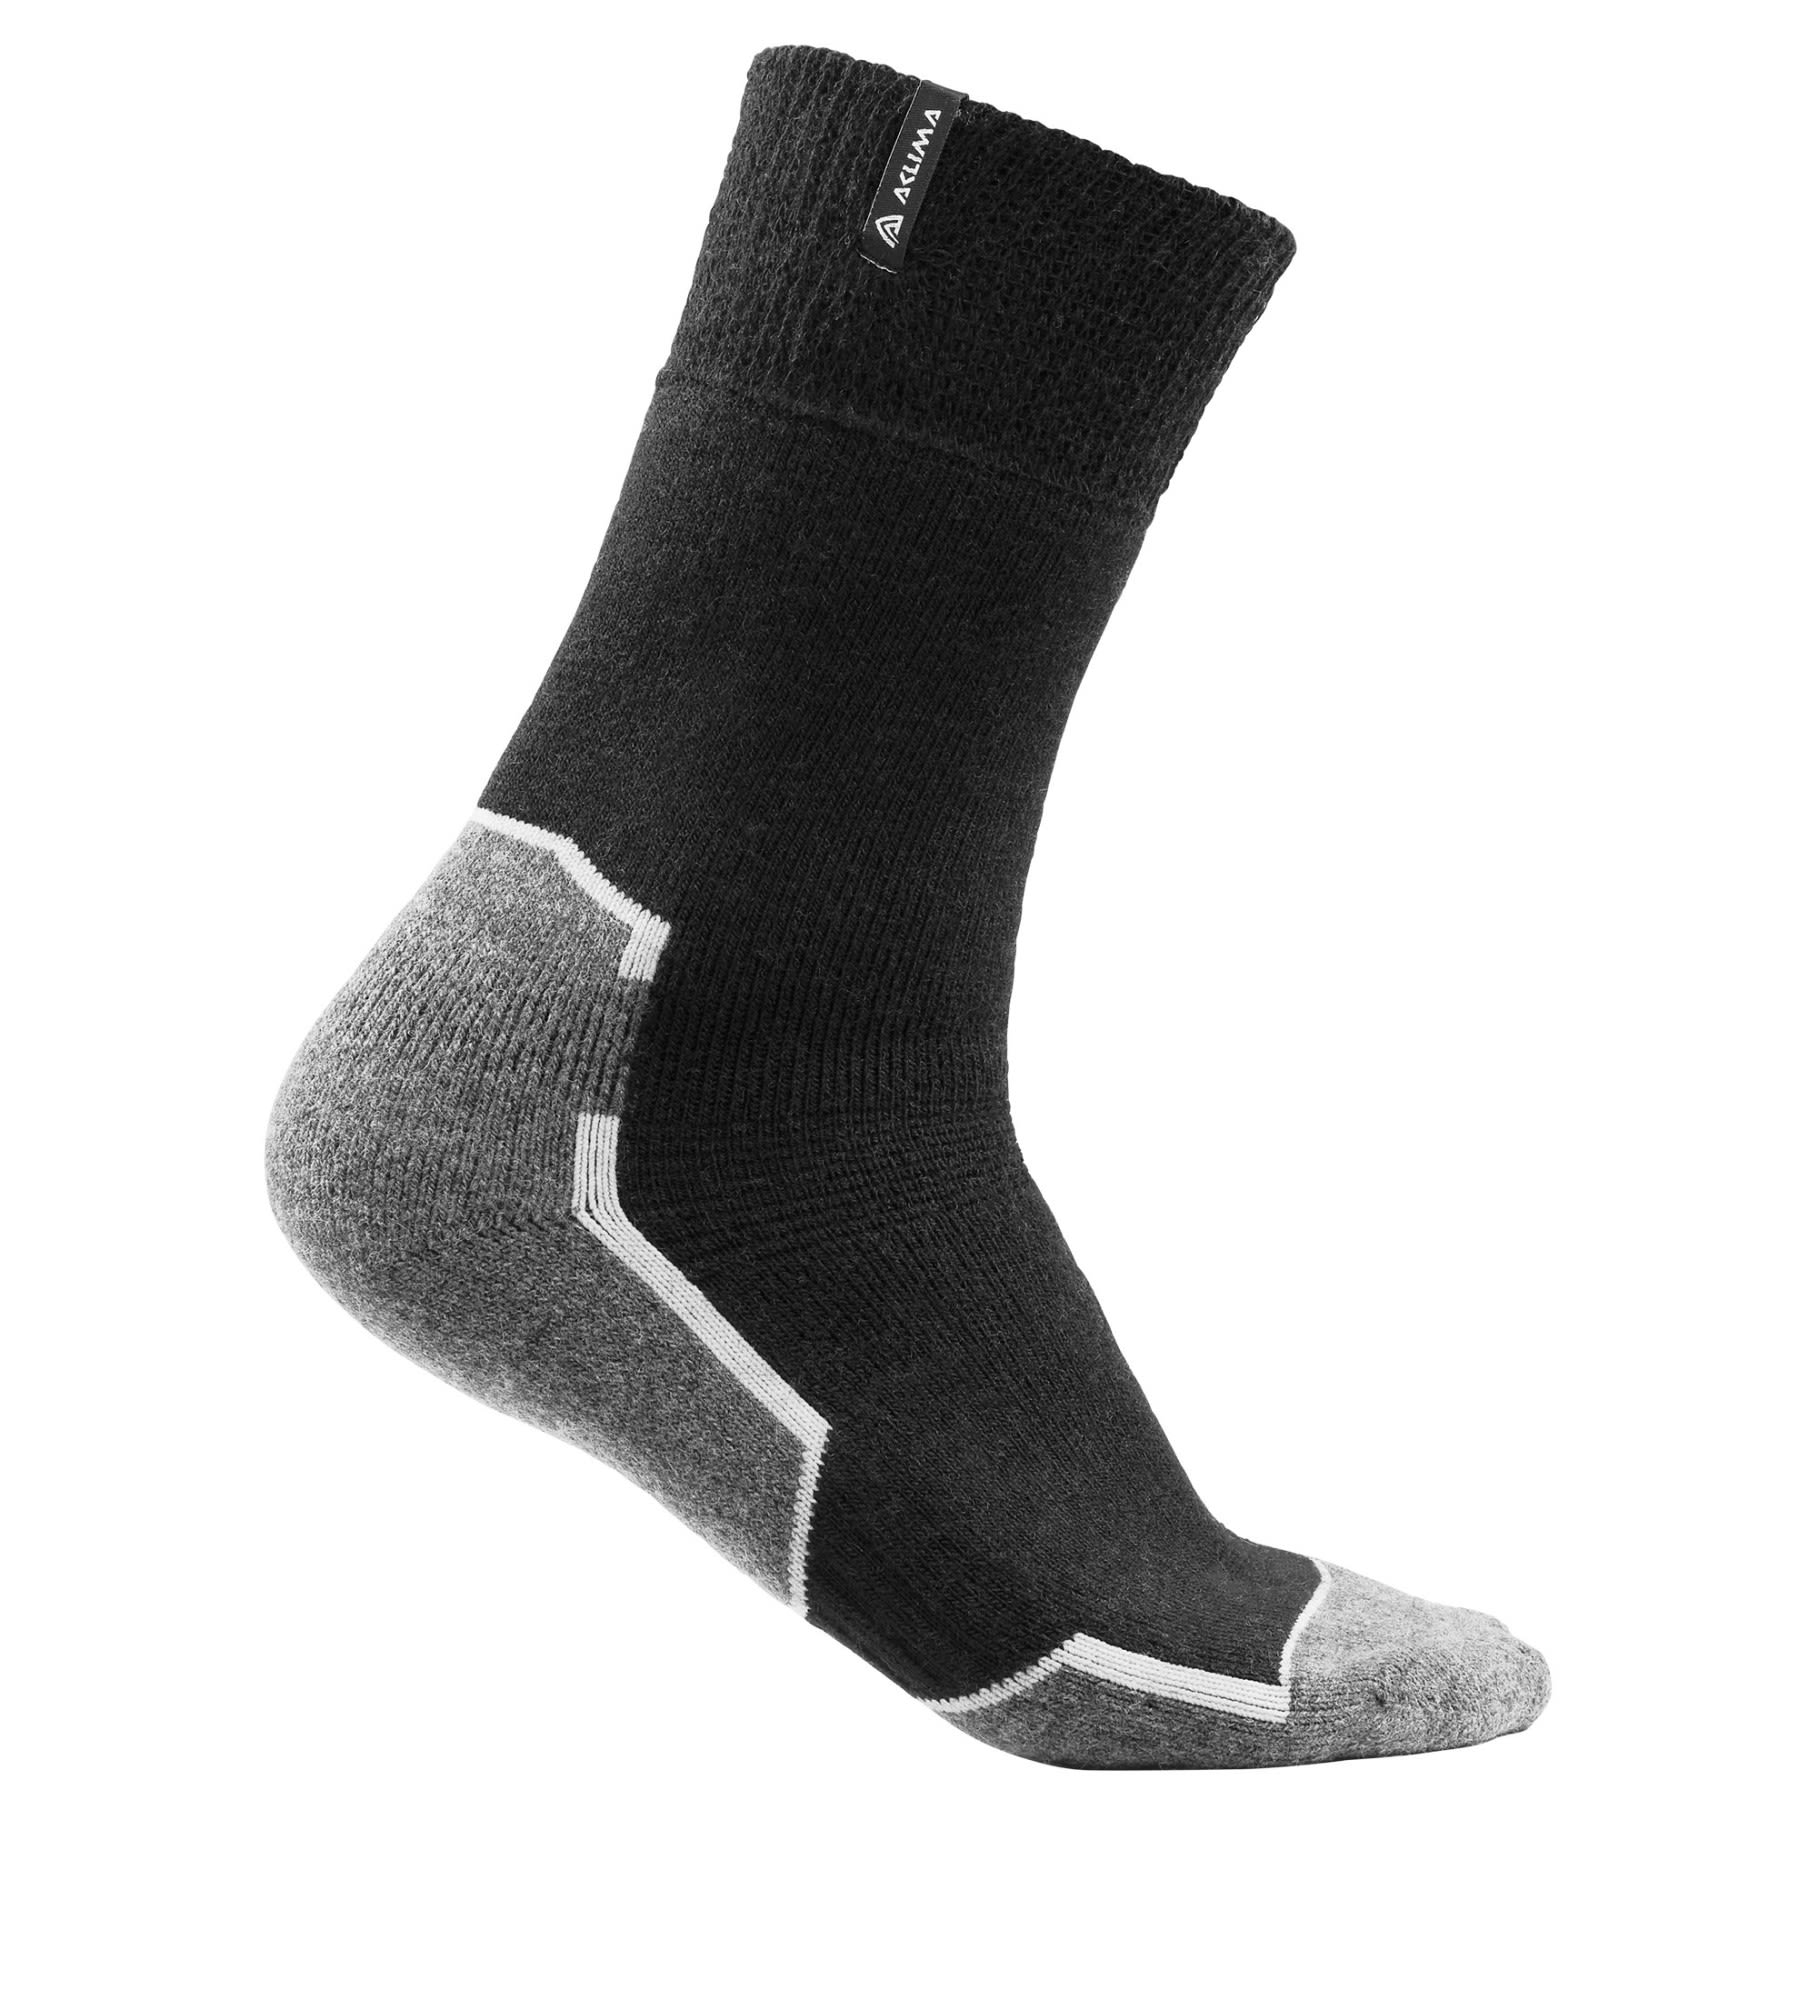 Aclima Warmwool Socks Schwarz- Merino Wander- und Trekkingsocken- Grsse 36 - 39 - Farbe Jet Black